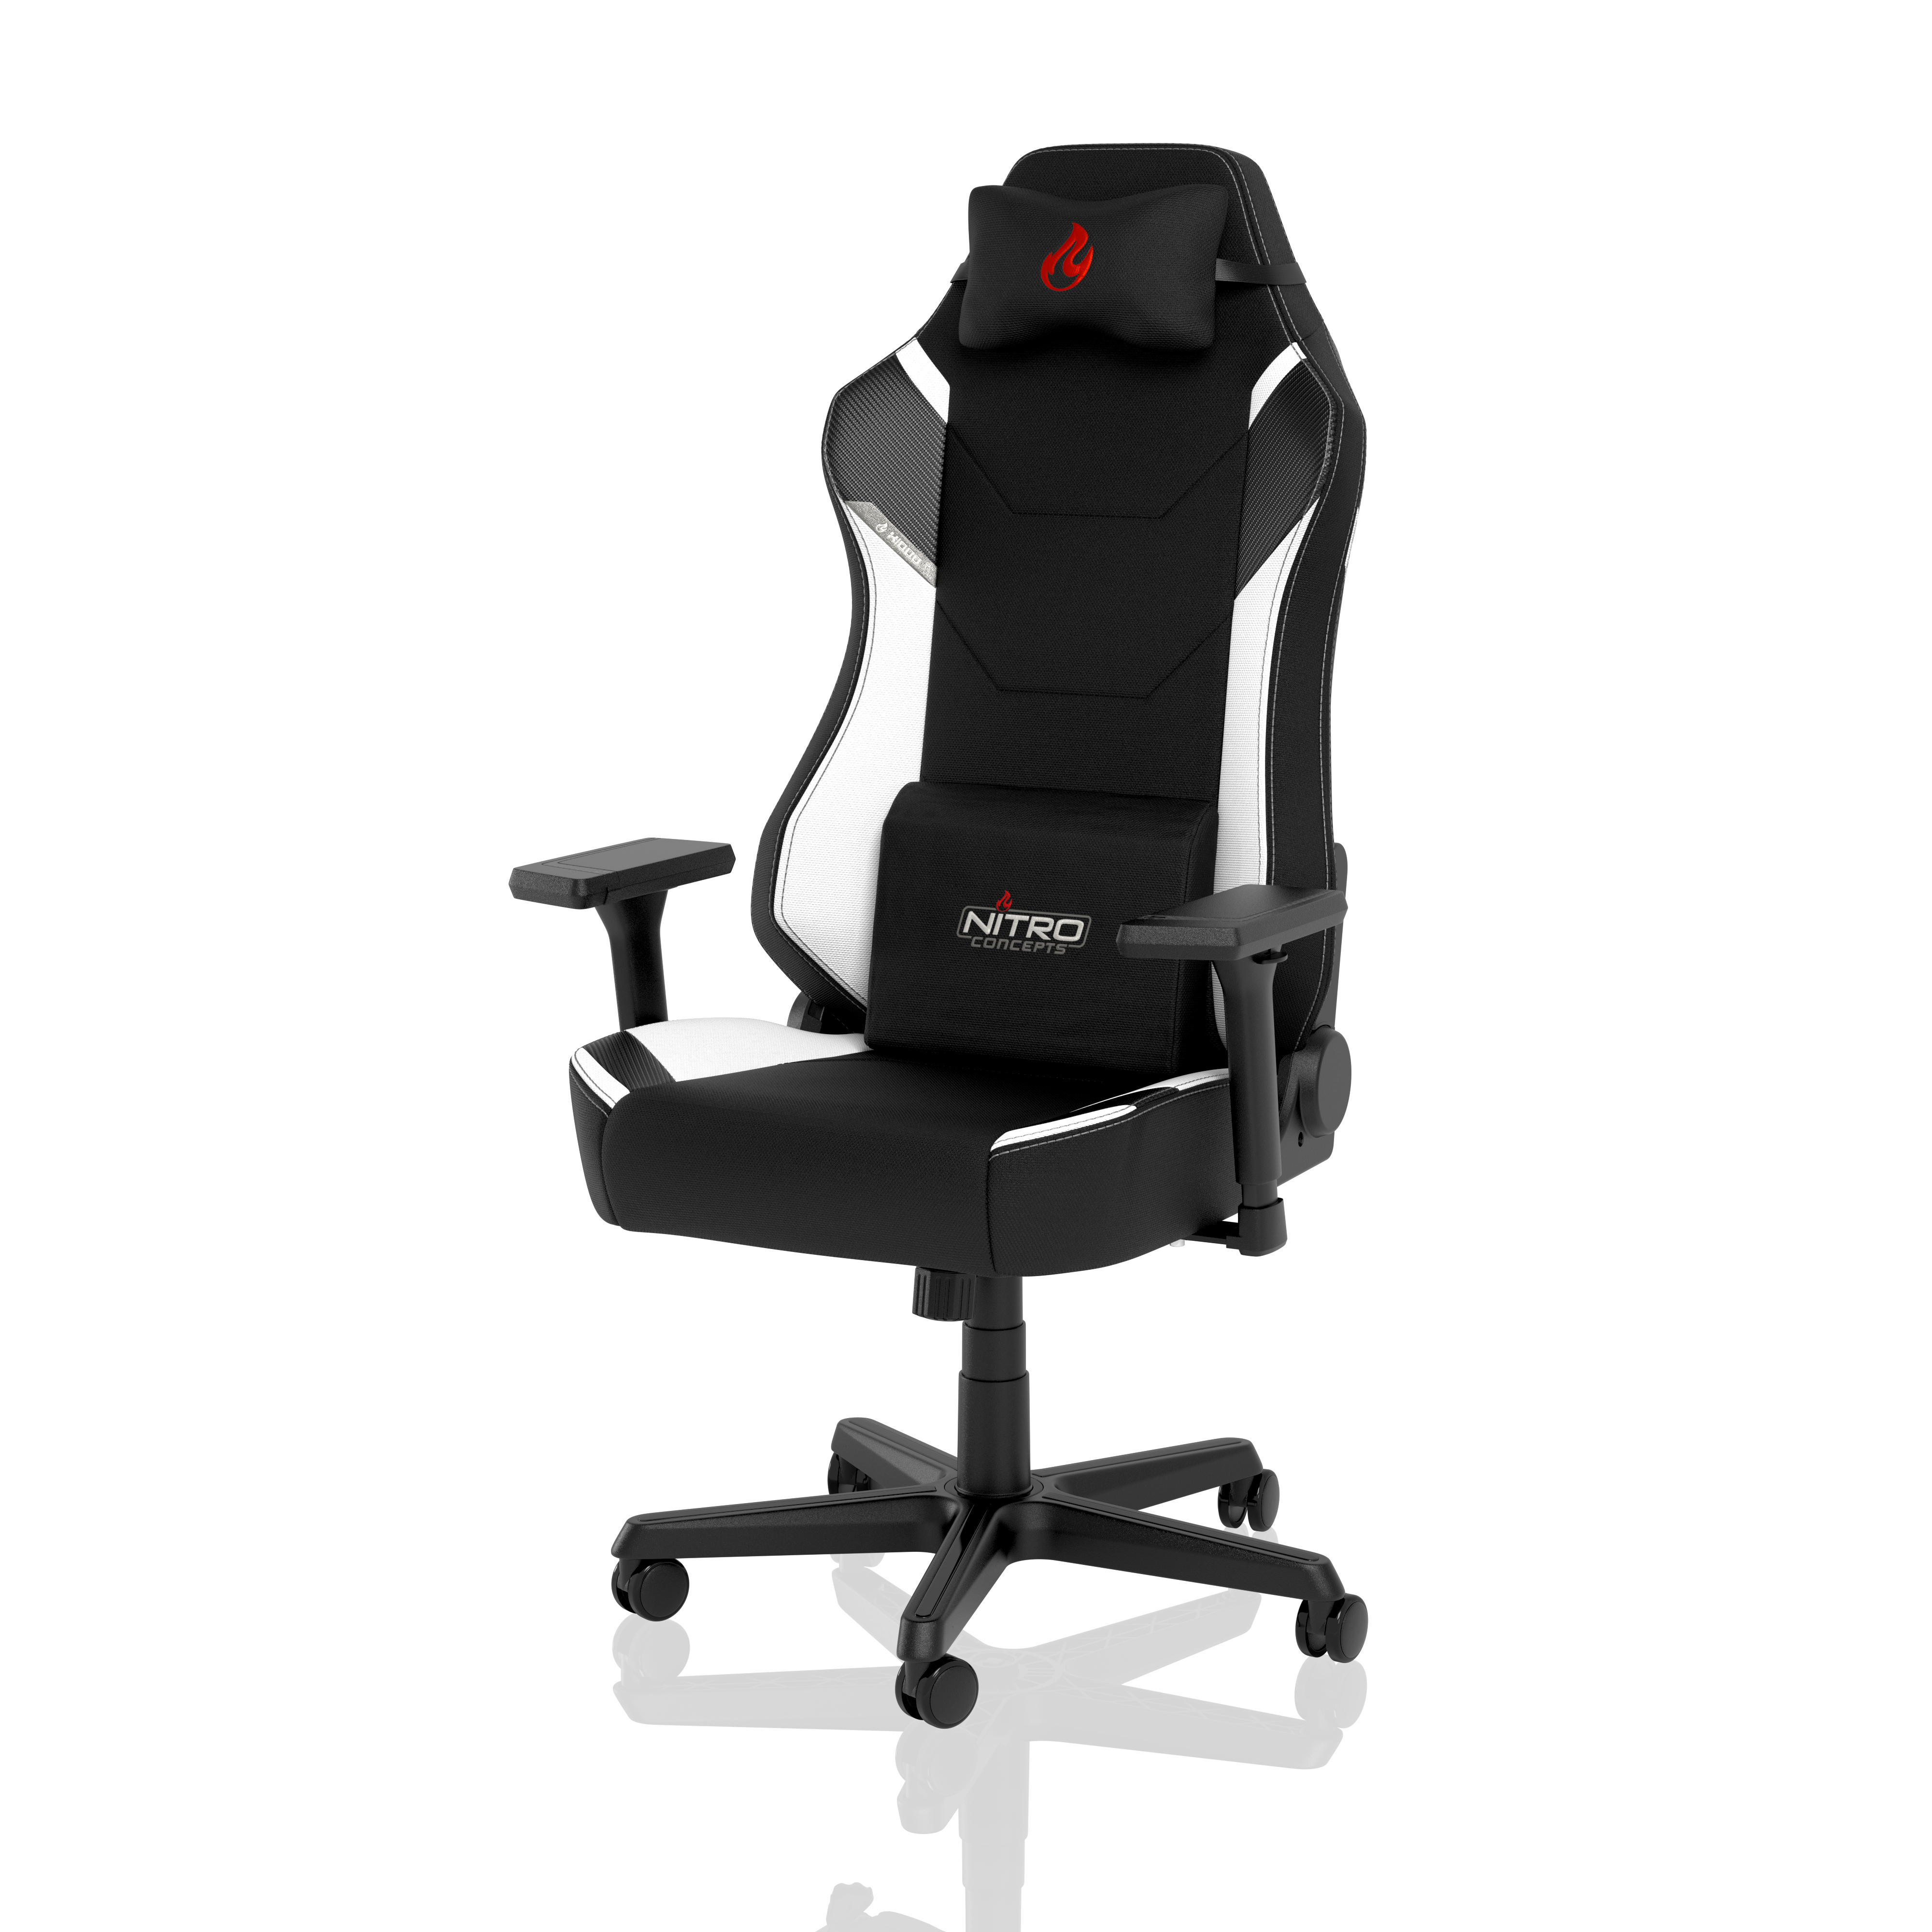 nitro-concepts - X1000 Gaming Chair Black/White